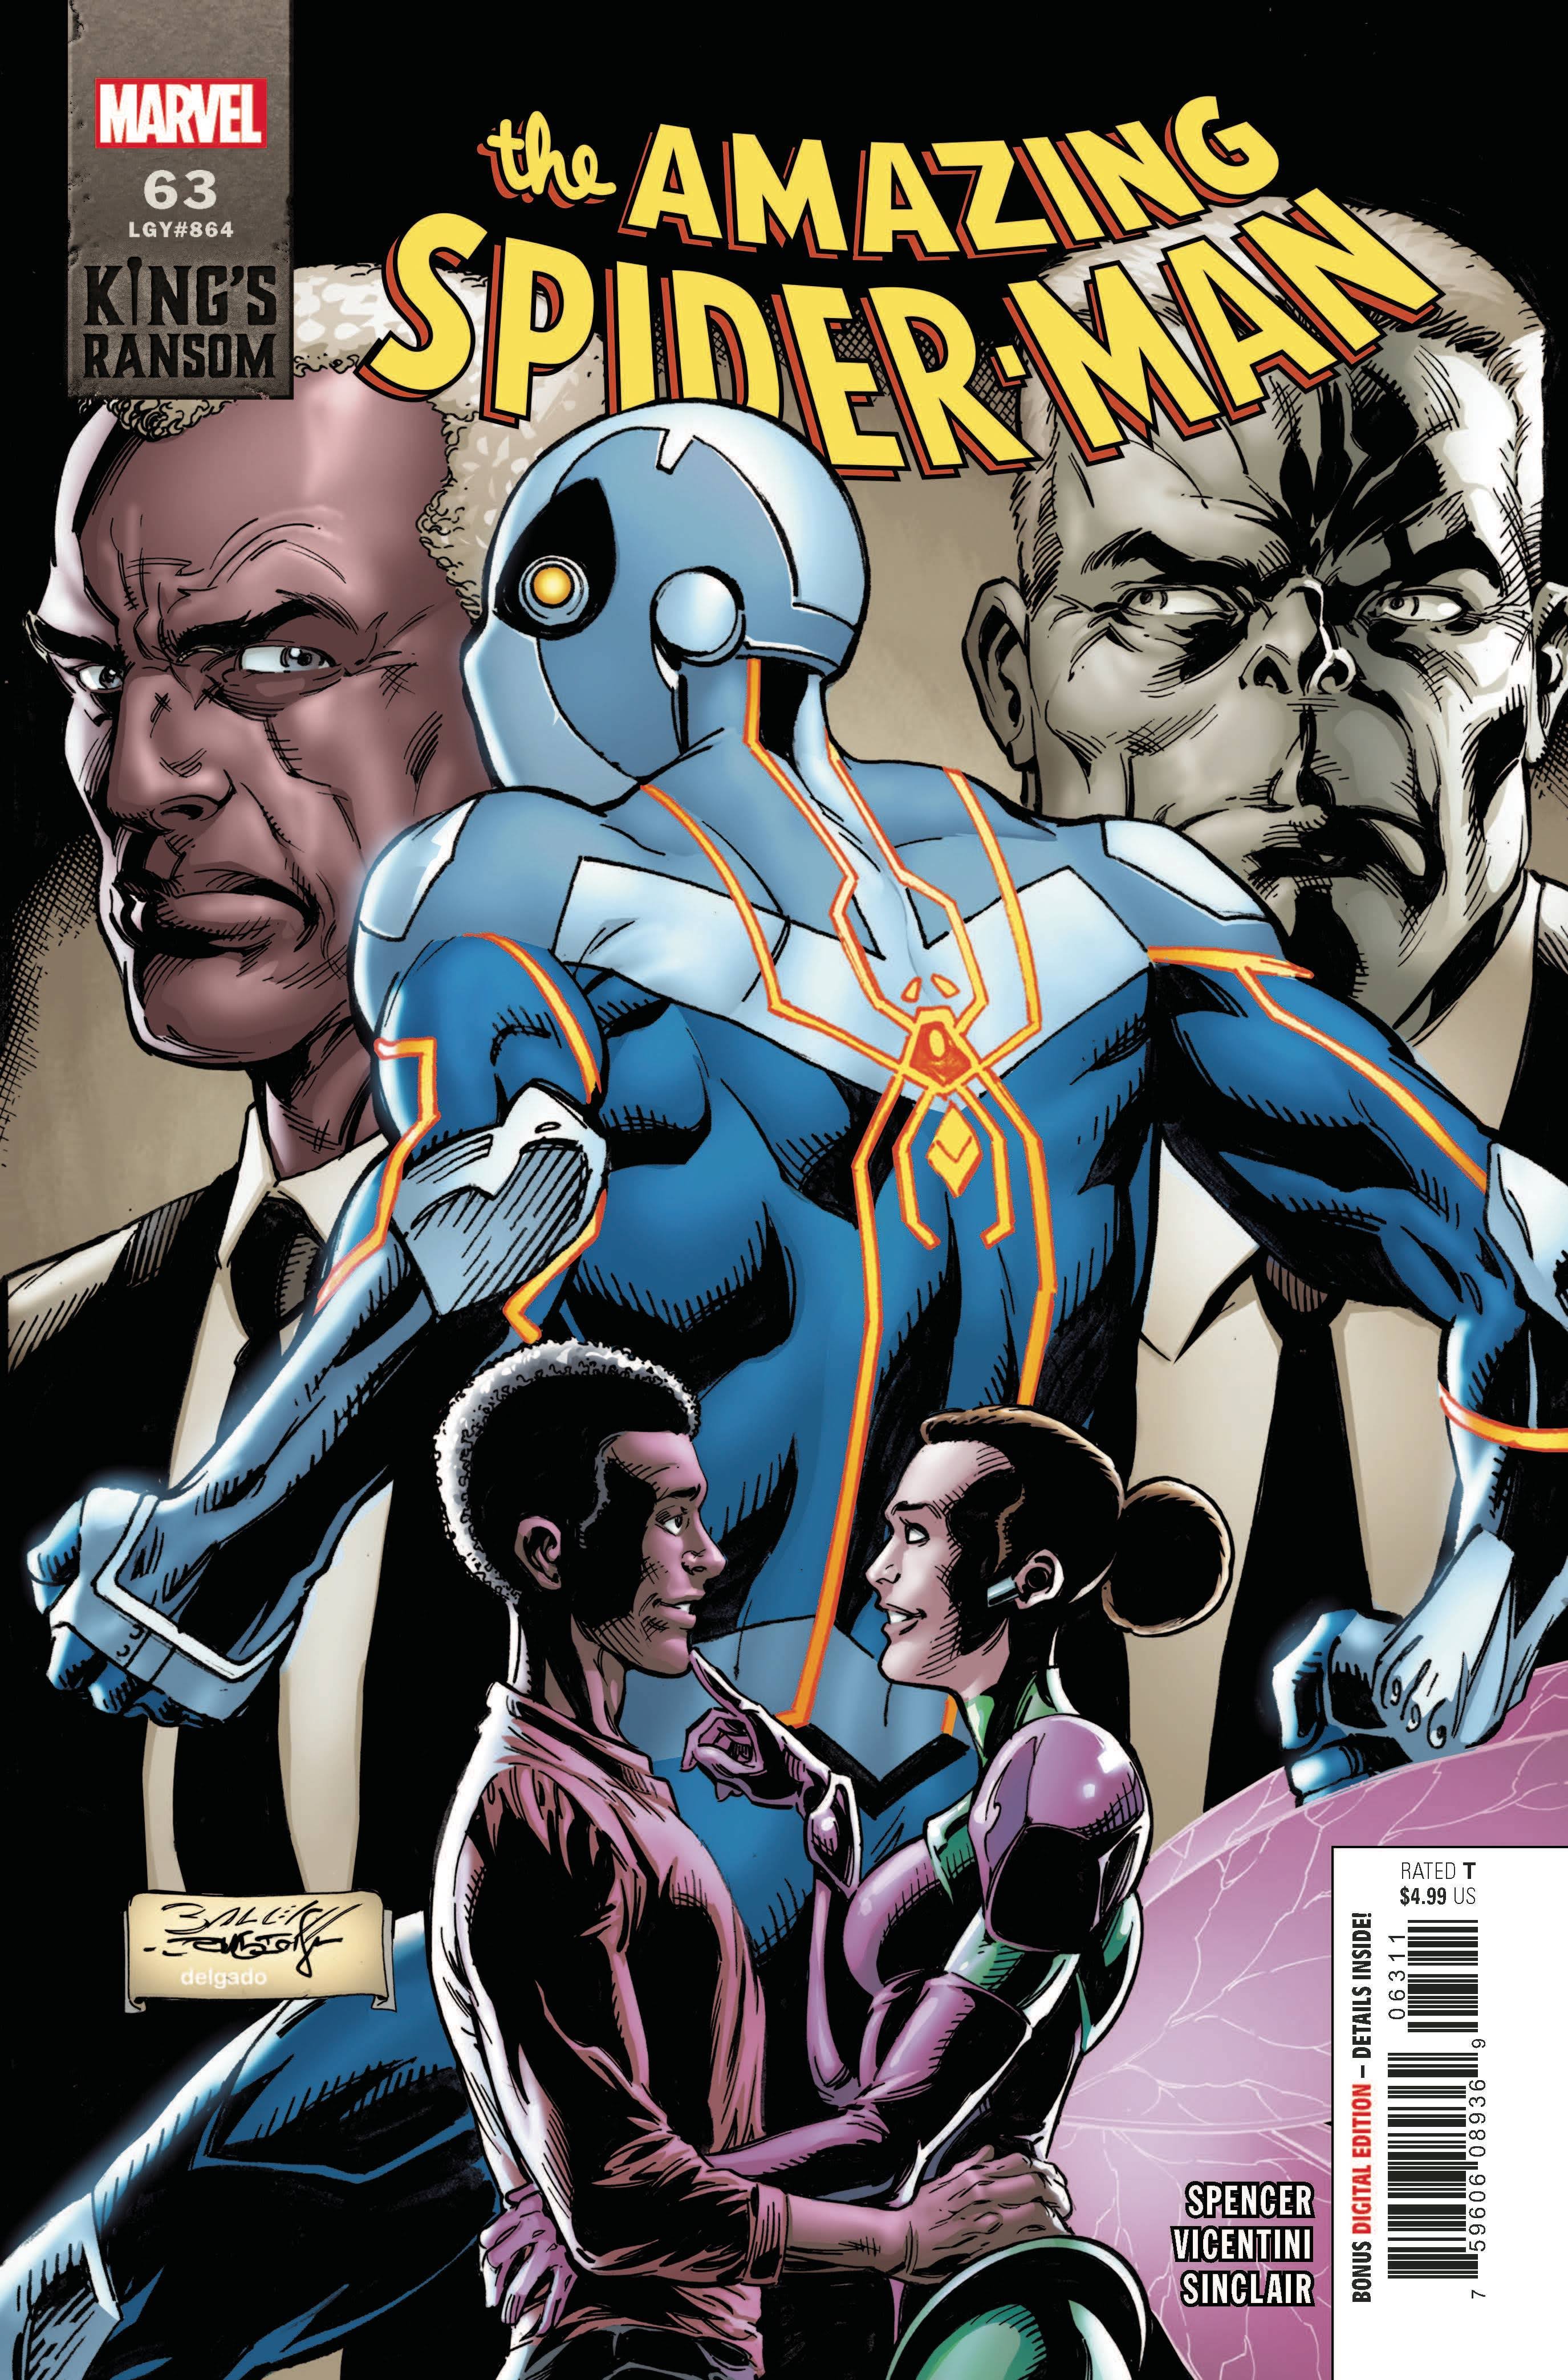 Spider-man #1 - Marvel Comics